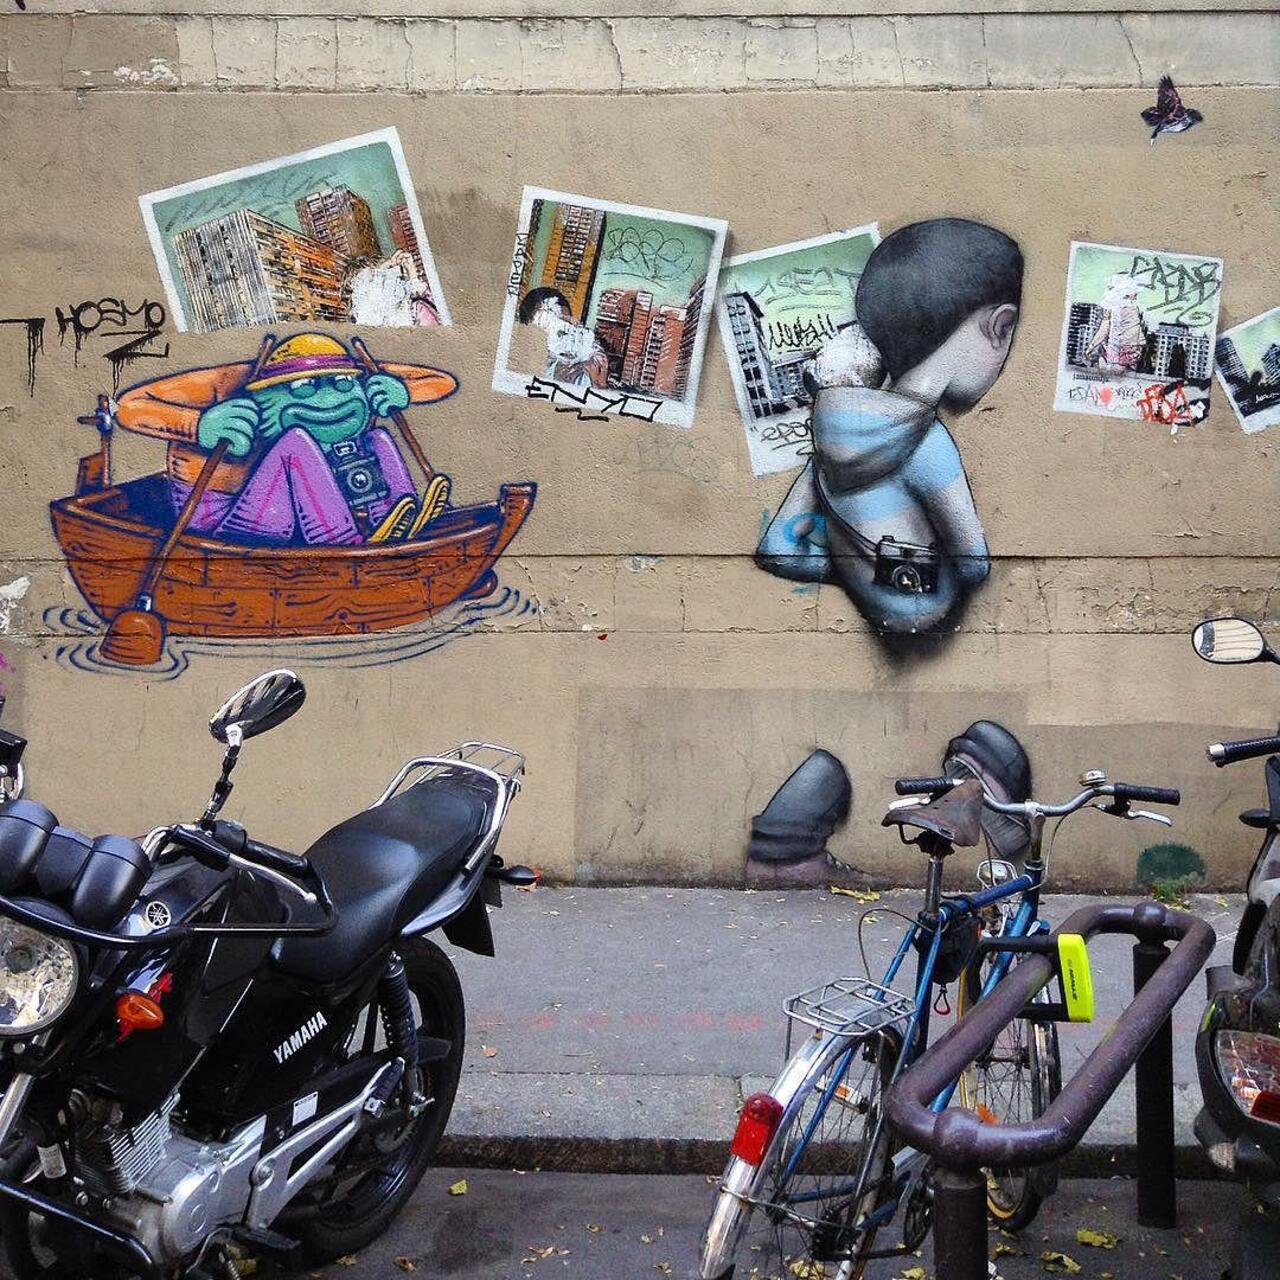 circumjacent_fr: #Paris #graffiti photo by fleurs.de.sel http://ift.tt/1WDYJuQ #StreetArt http://t.co/UkdZfKNXp4